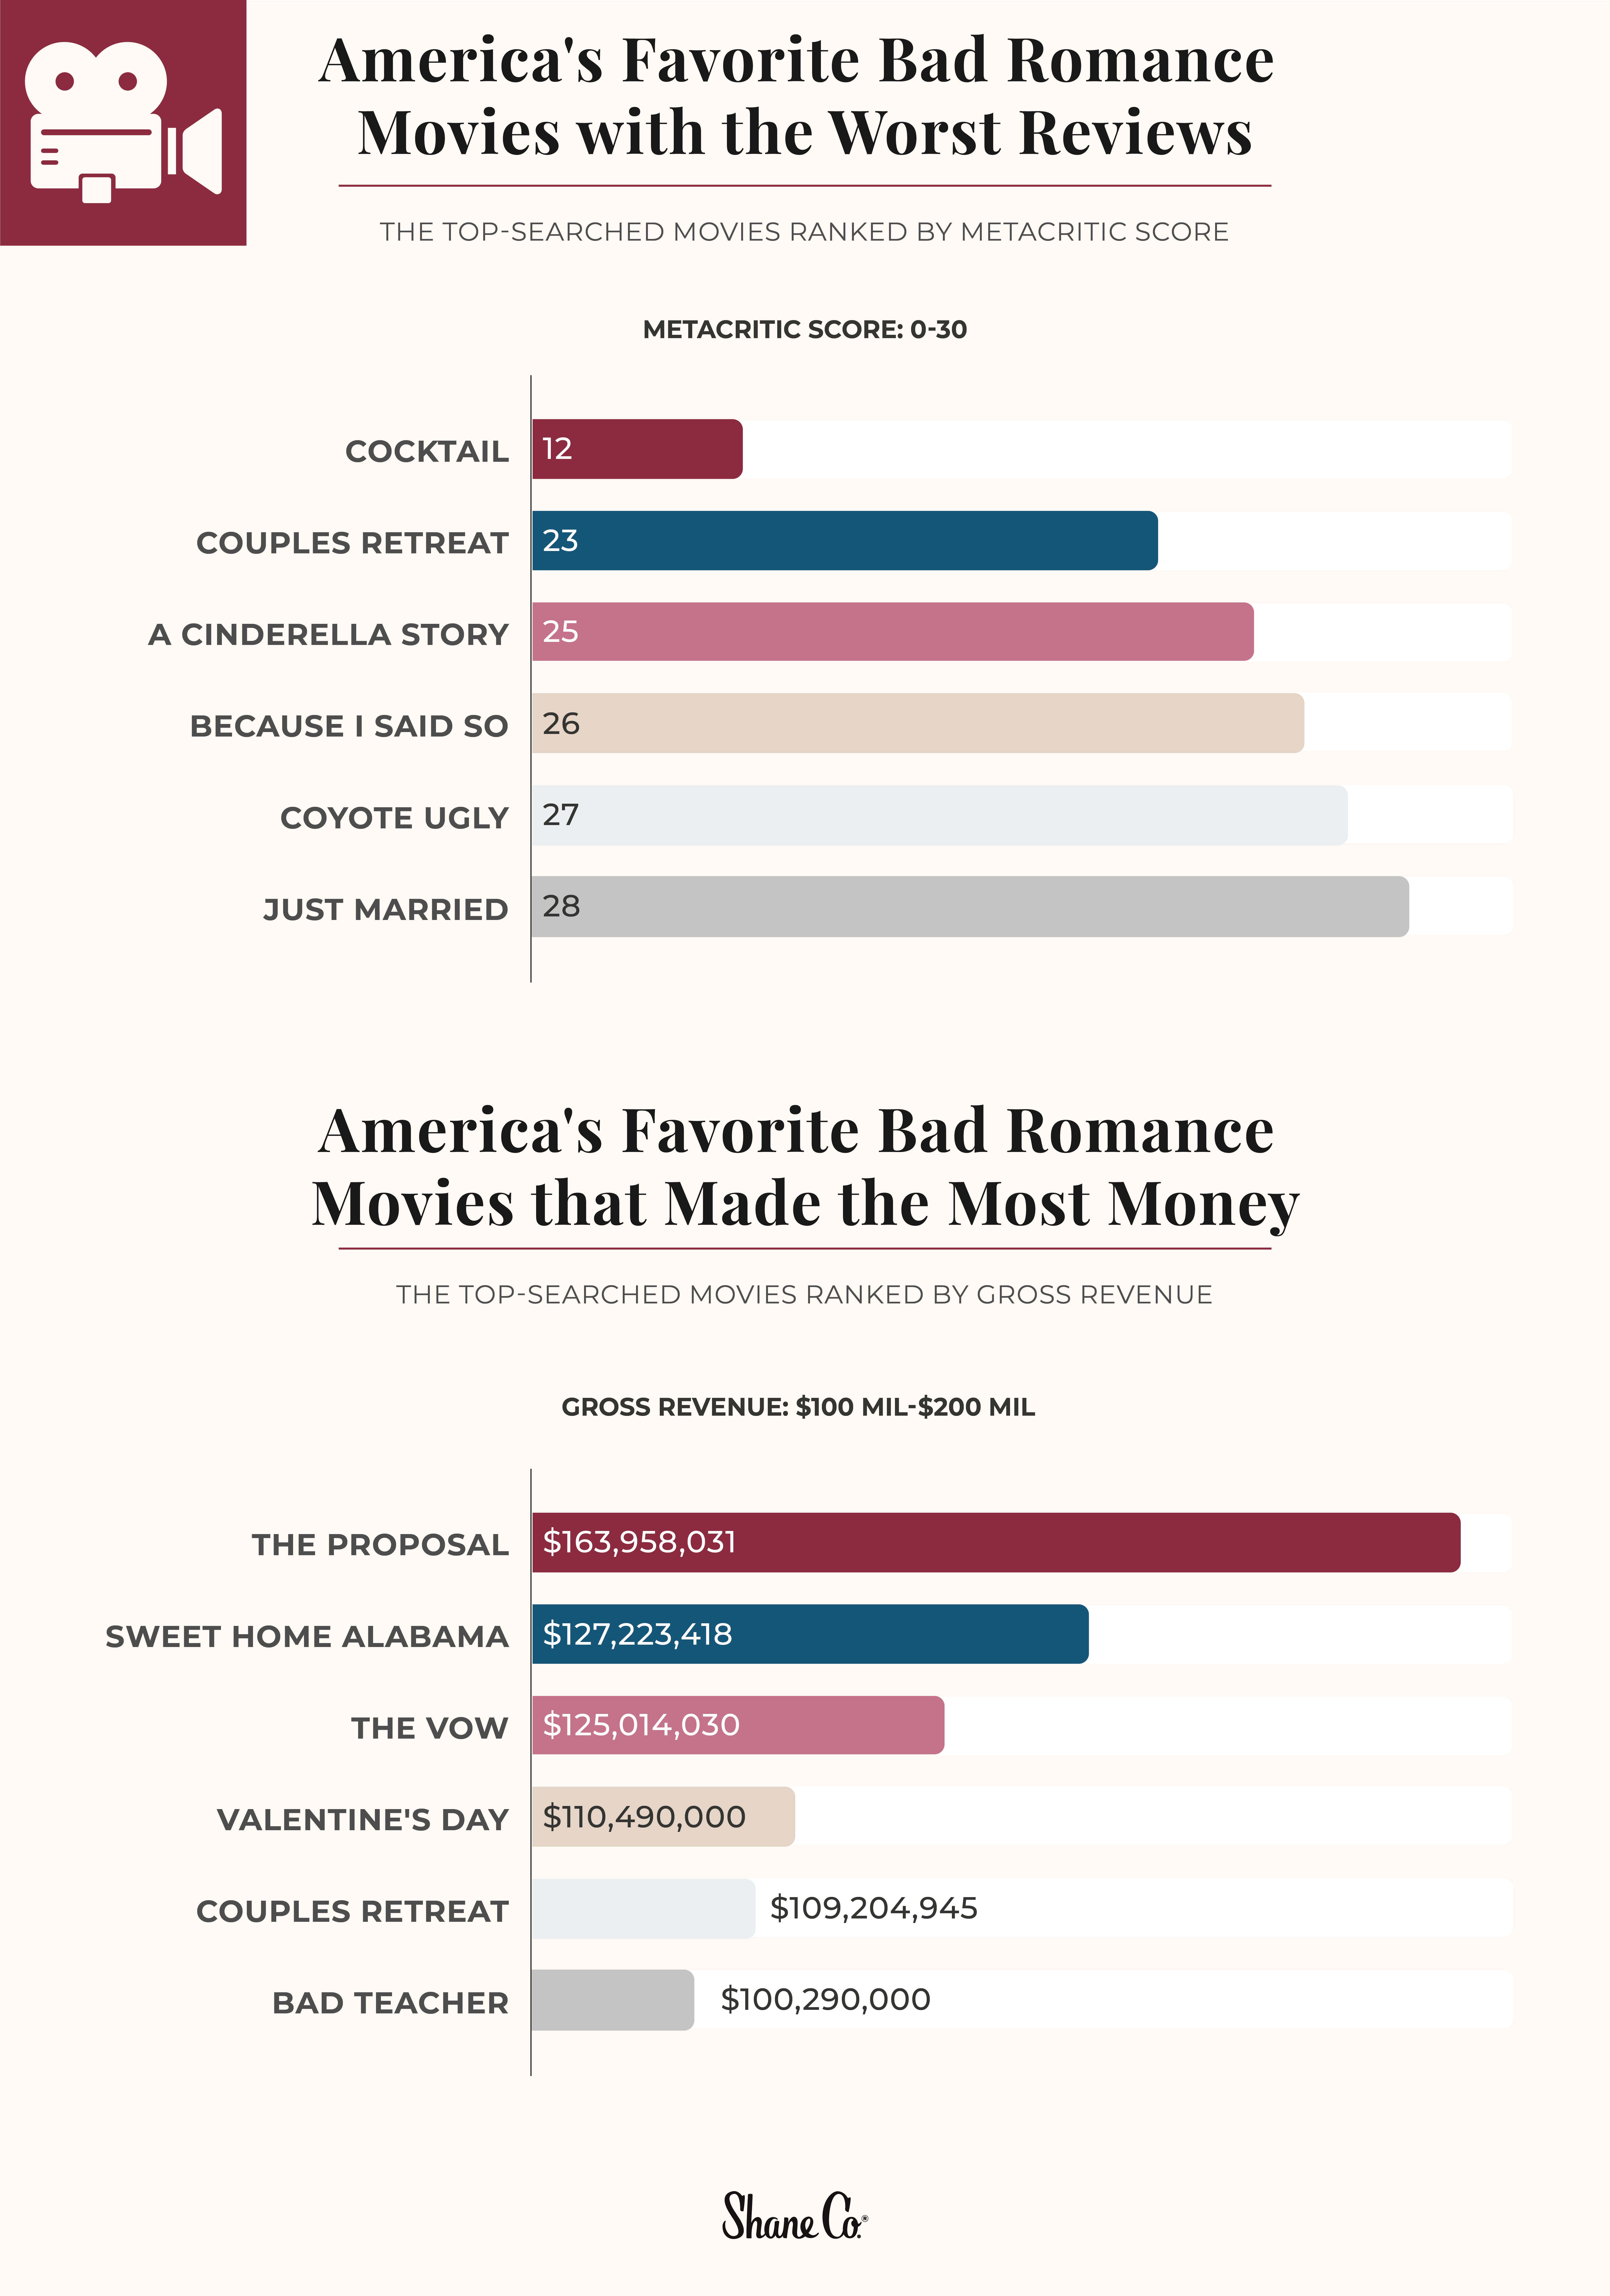 Graphic of America’s favorite bad romance movies.